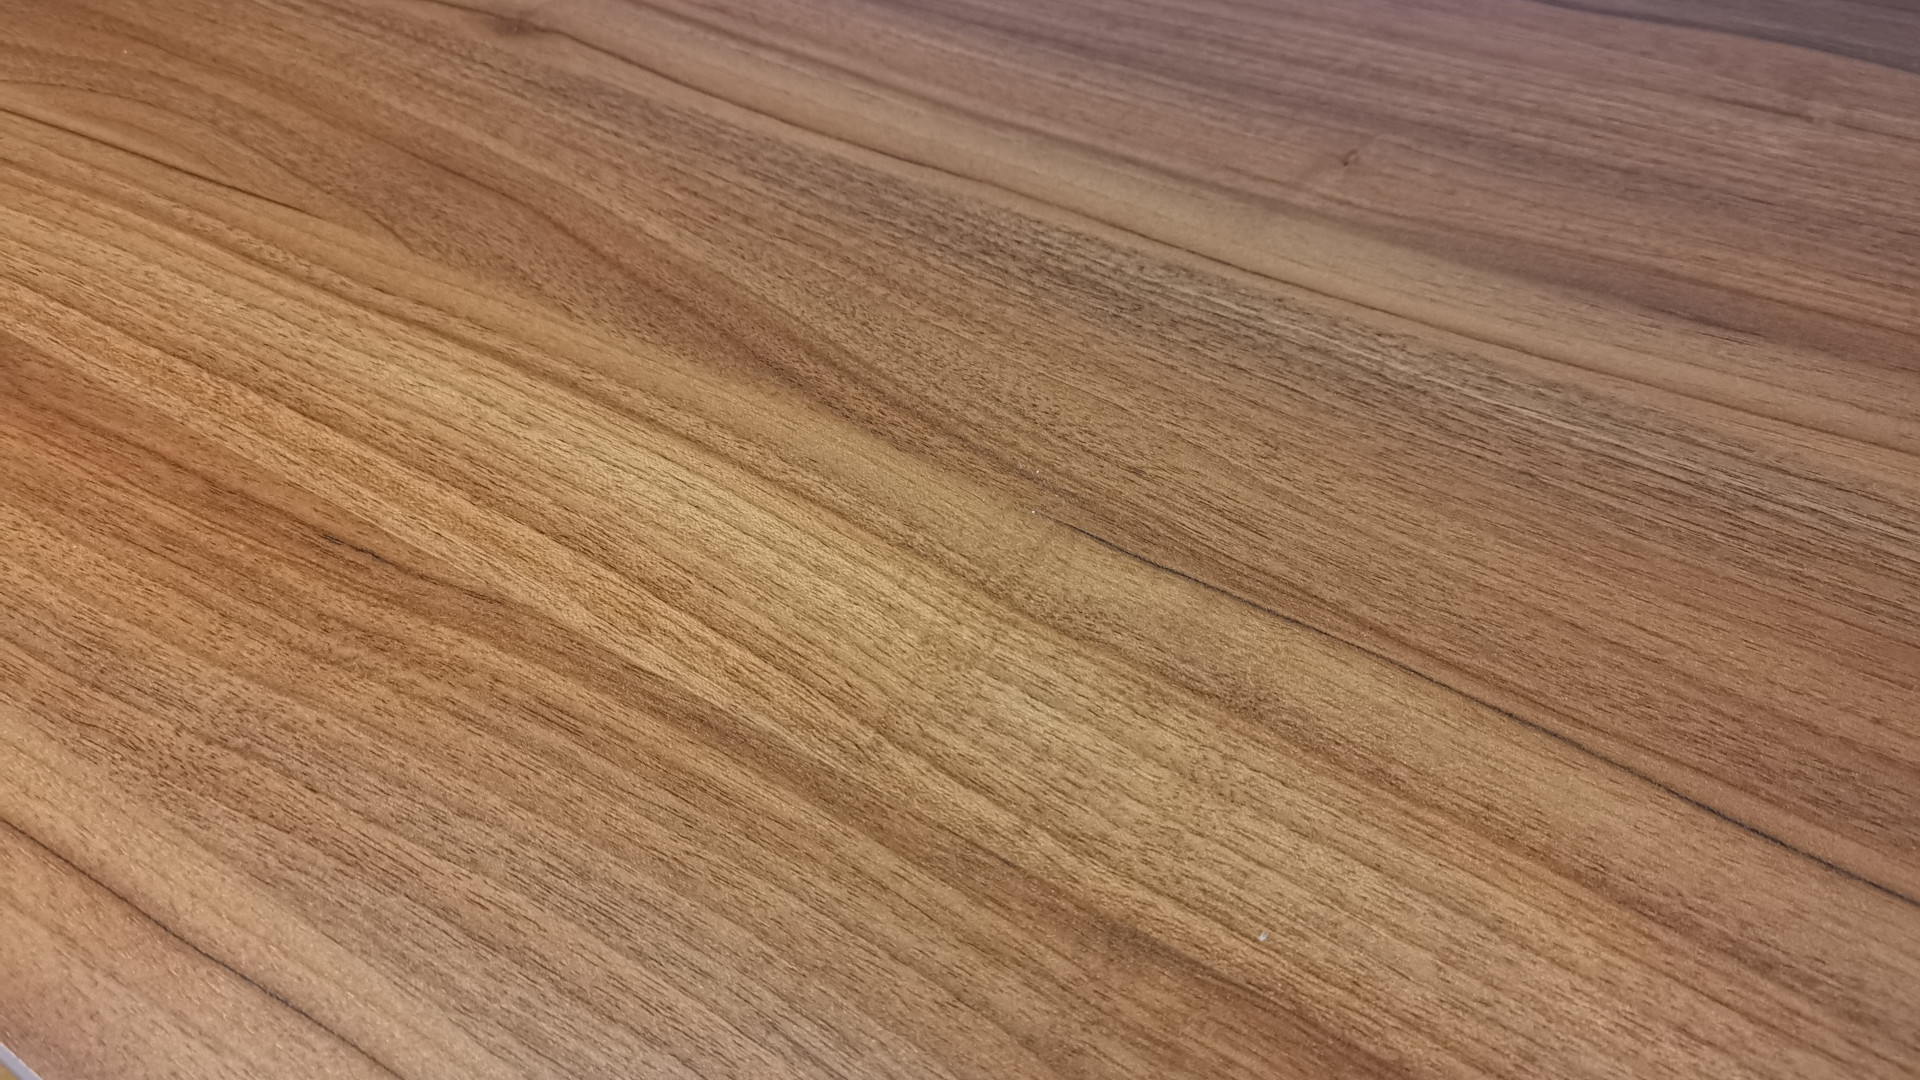 The faux wood grain effect on the Friska Primo Designer floor table